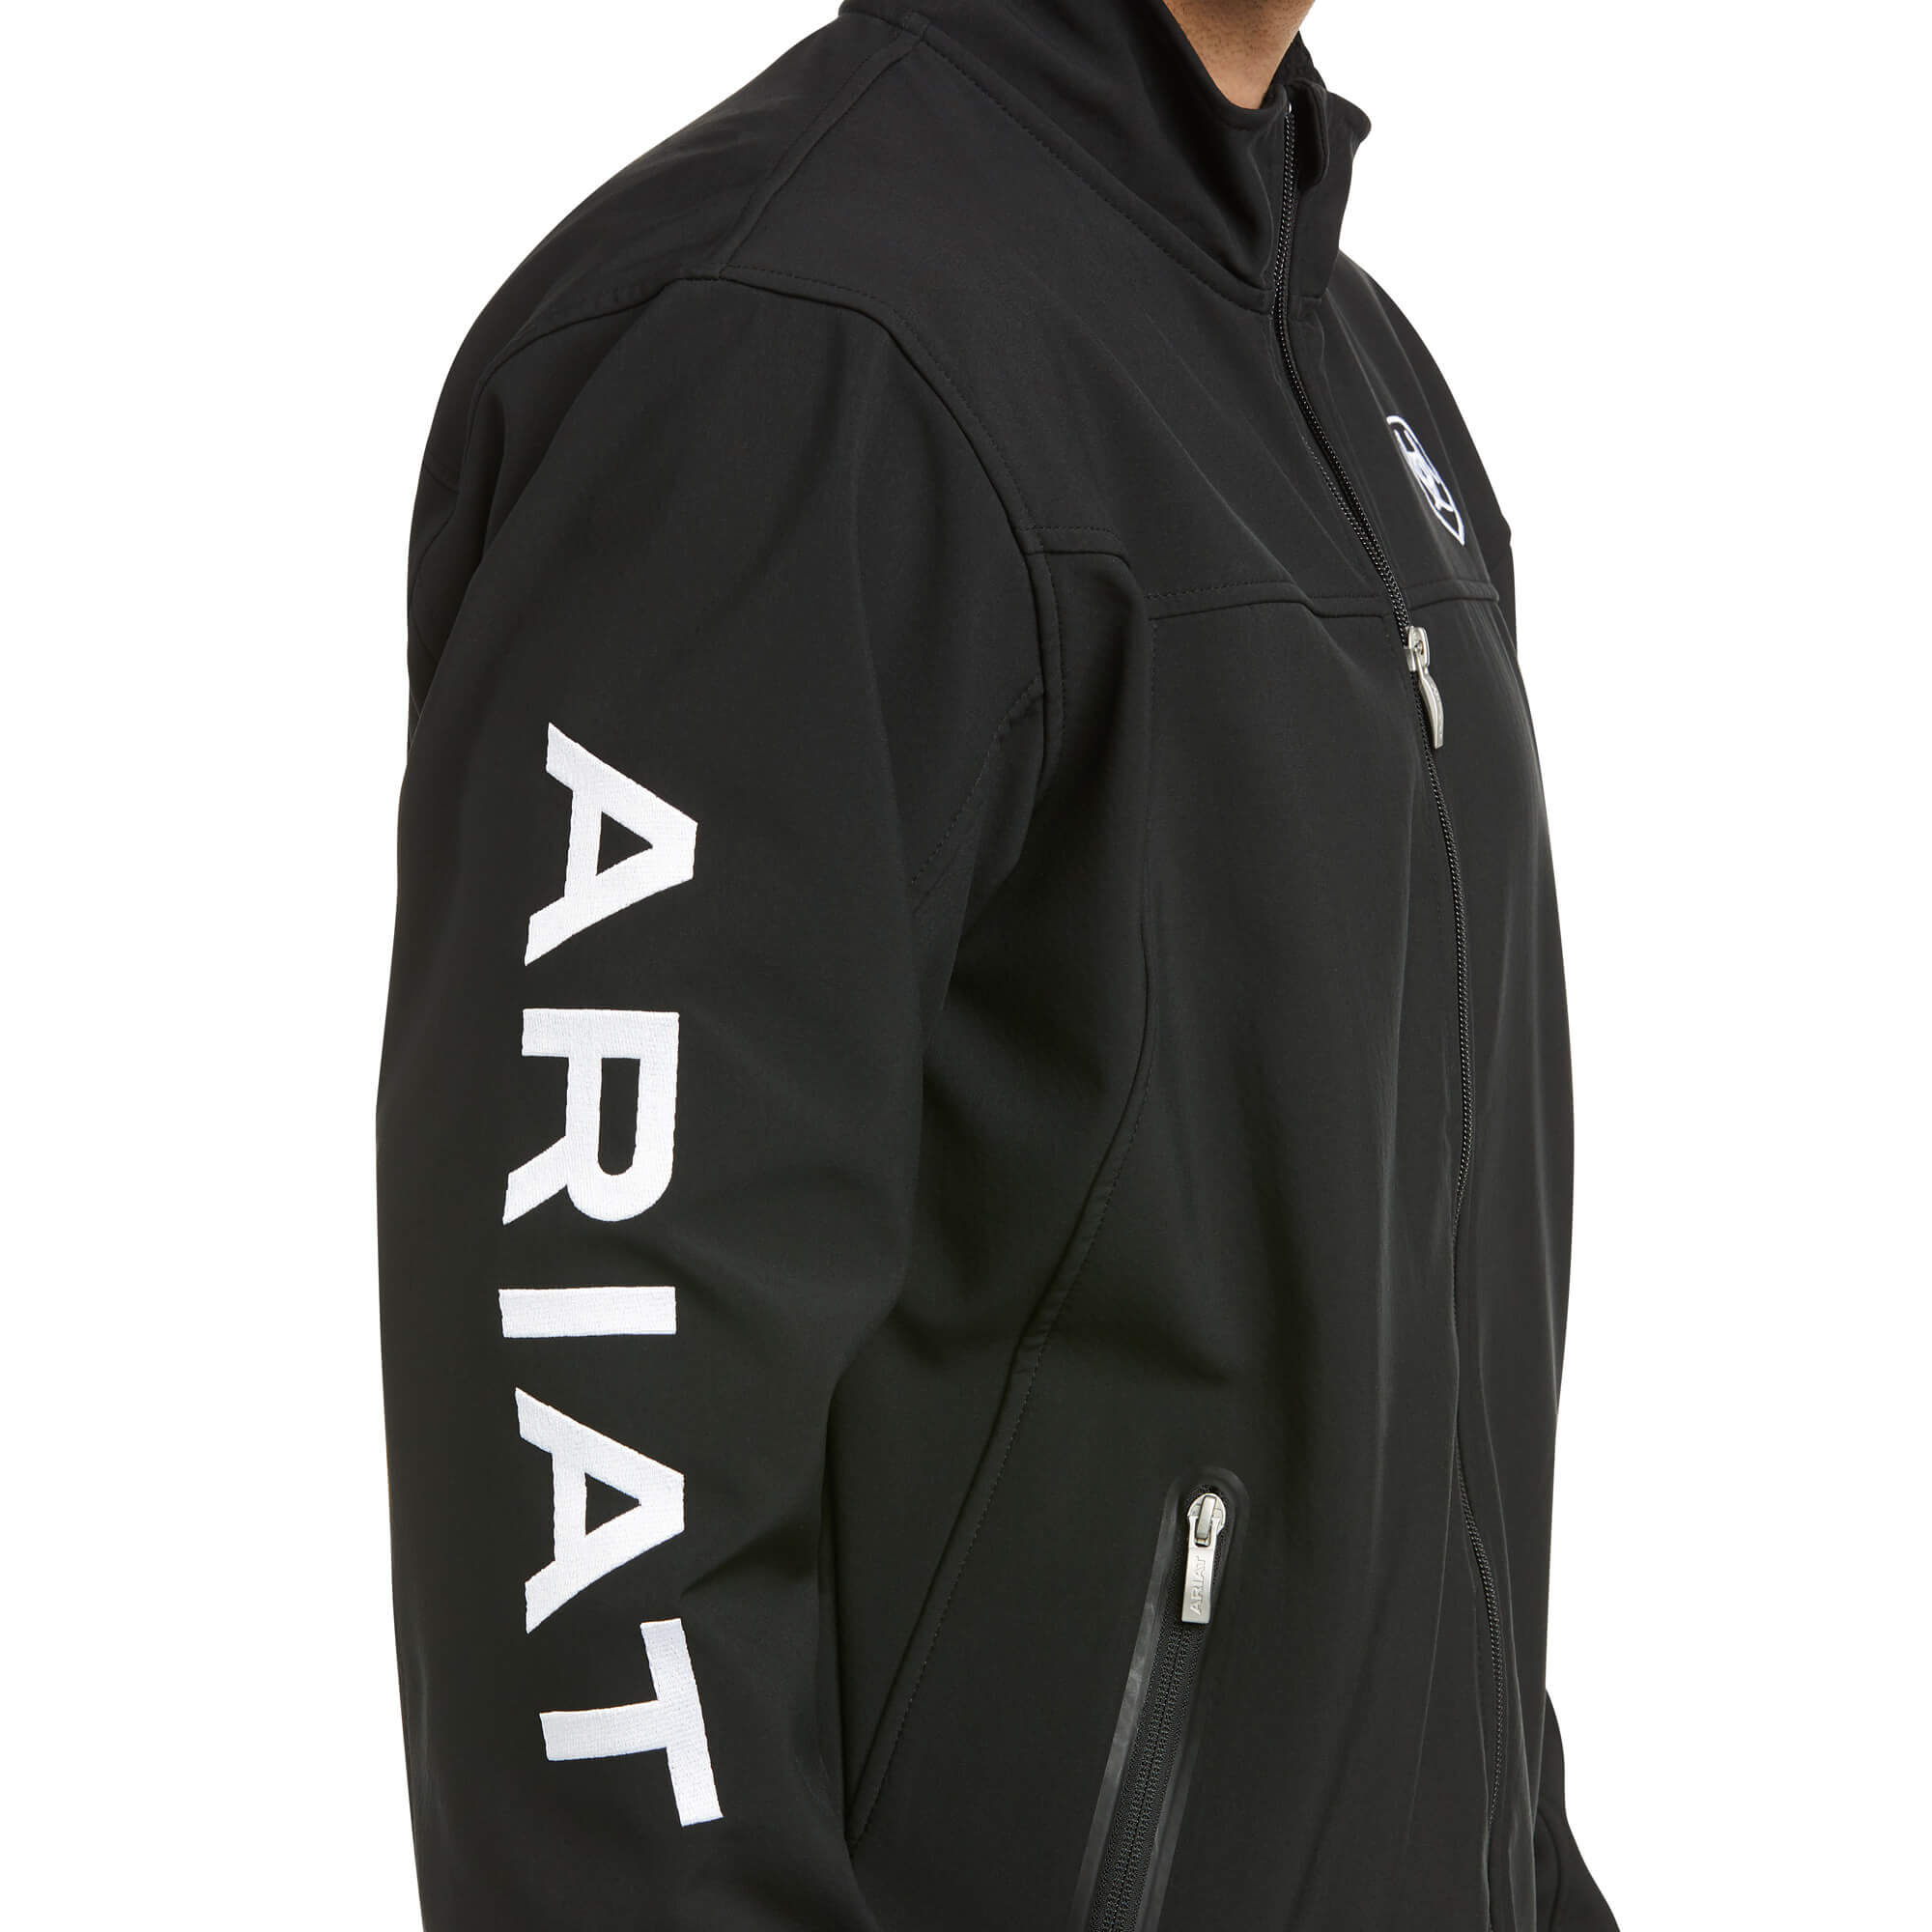 Ariat Ariat Mens New Team Softshell Jacket Black Mens Large 889359184414 